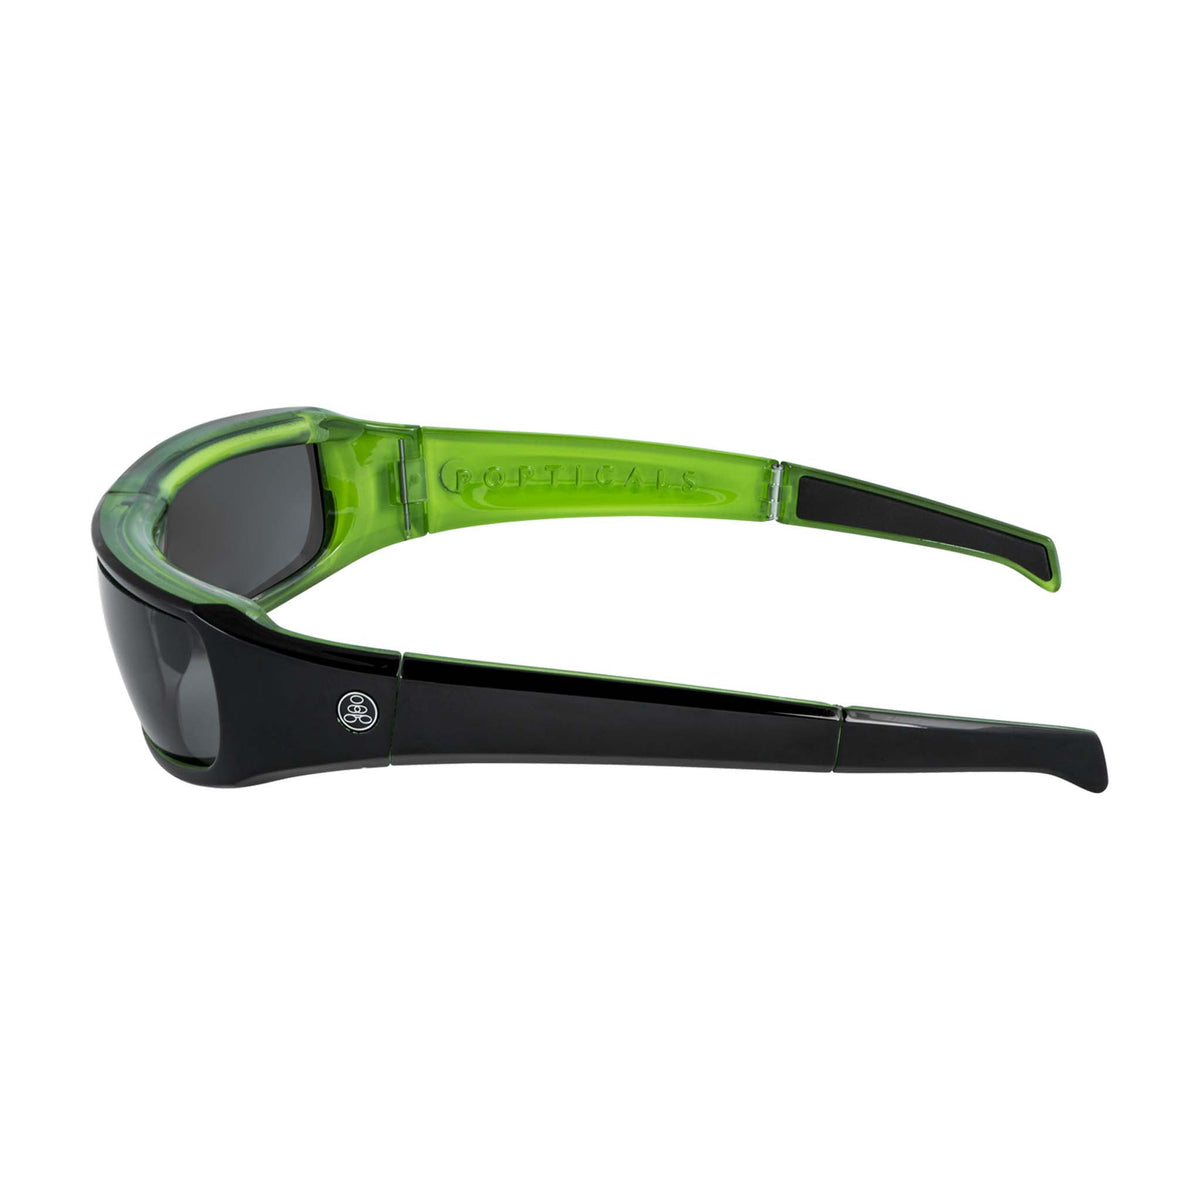 Popticals, Premium Compact Sunglasses, PopSign, 040020-GLGP, Polarized Sunglasses, Gloss Black over Green Crystal Frame, Gray Lenses, Side View